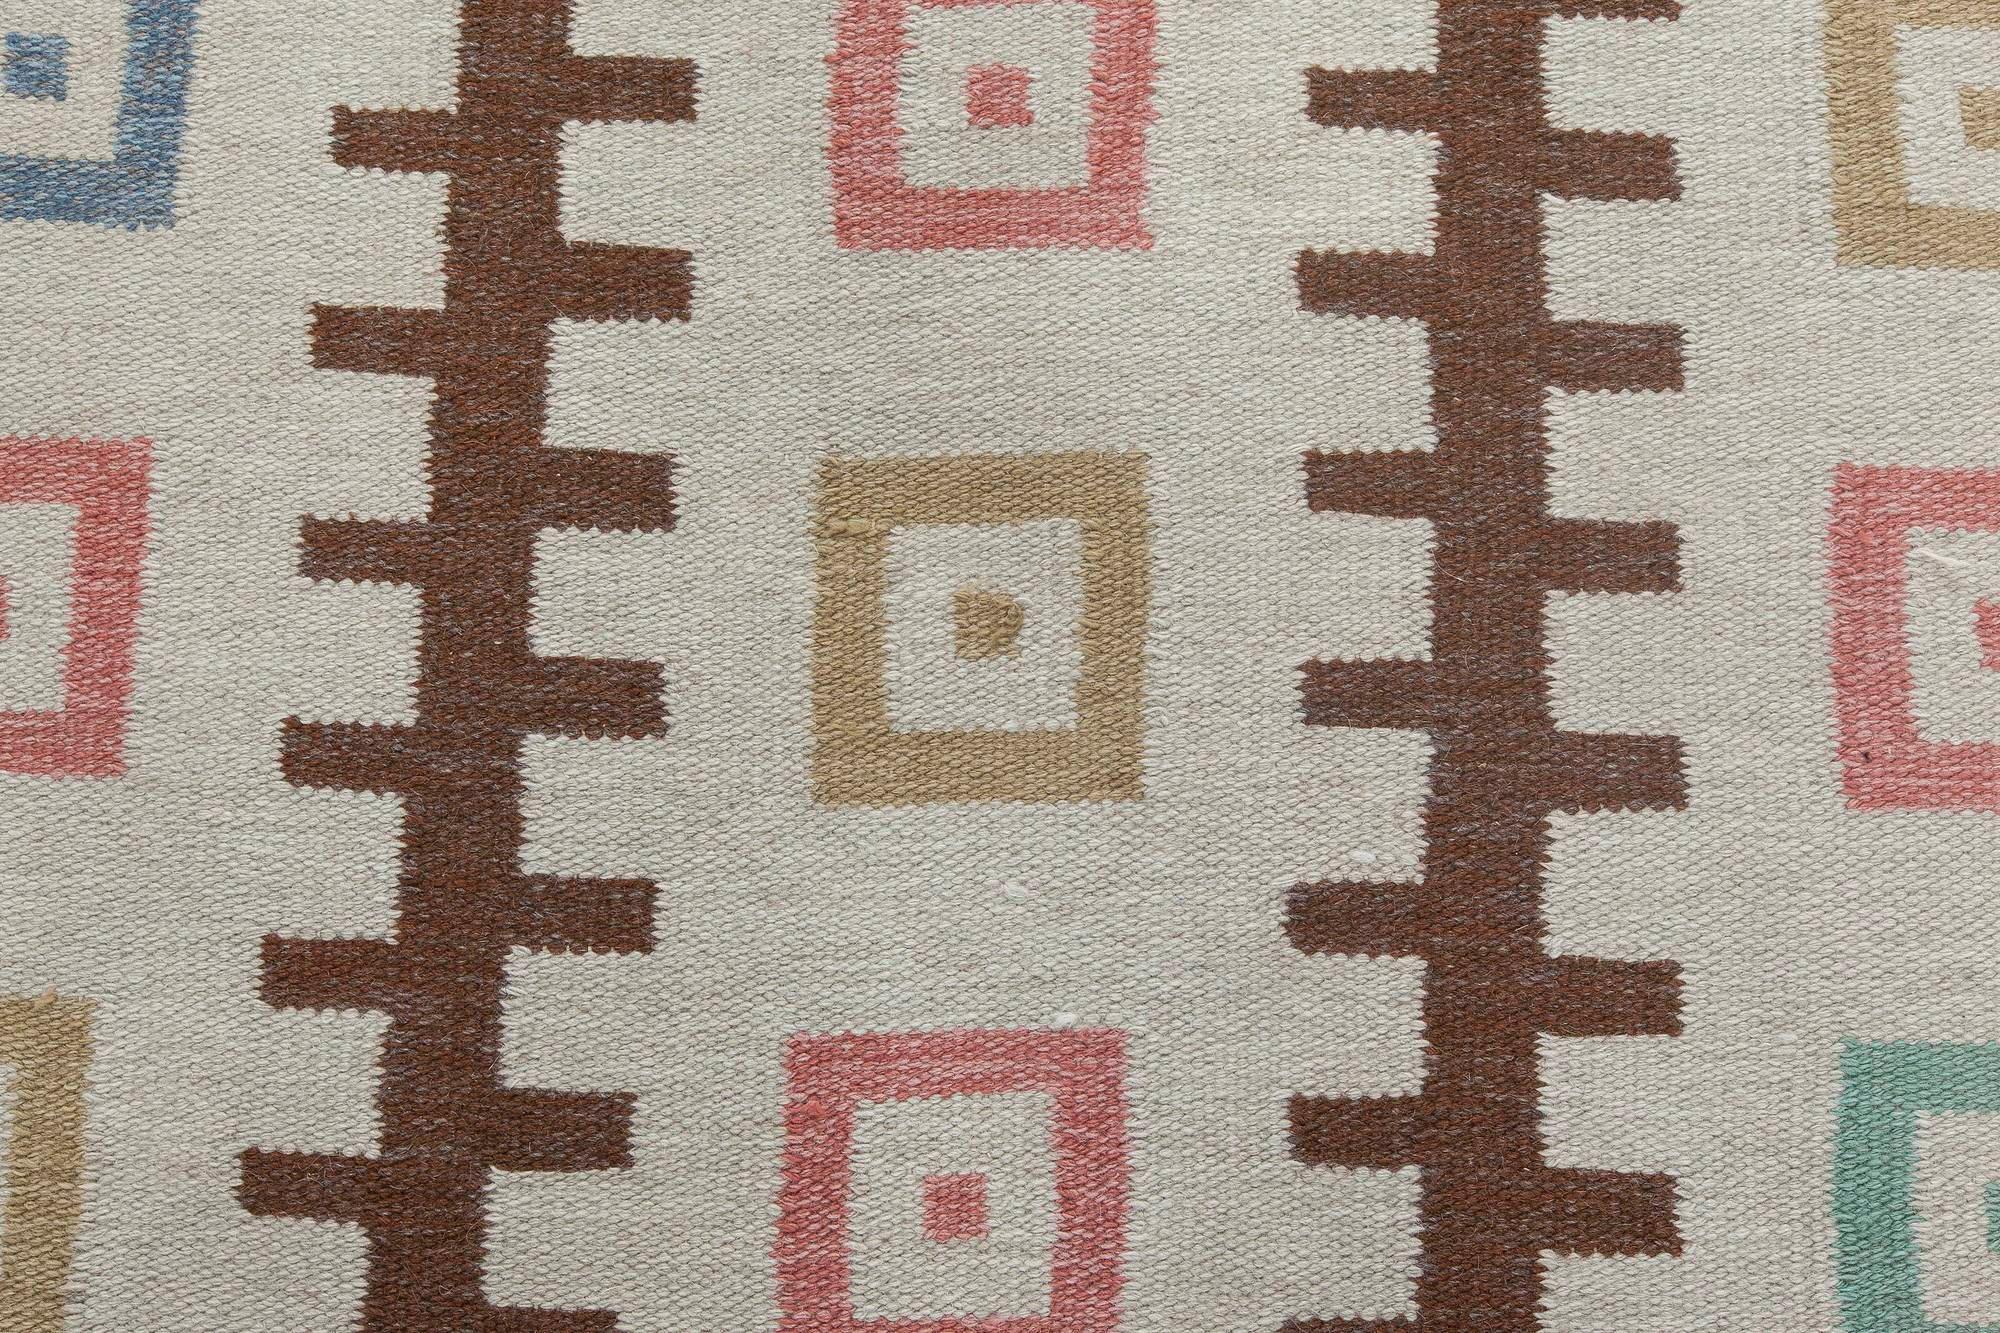 Mid-20th century Swedish geometric design handmade wool rug. Woven initials and date 'GO 1952'
Size: 6'3